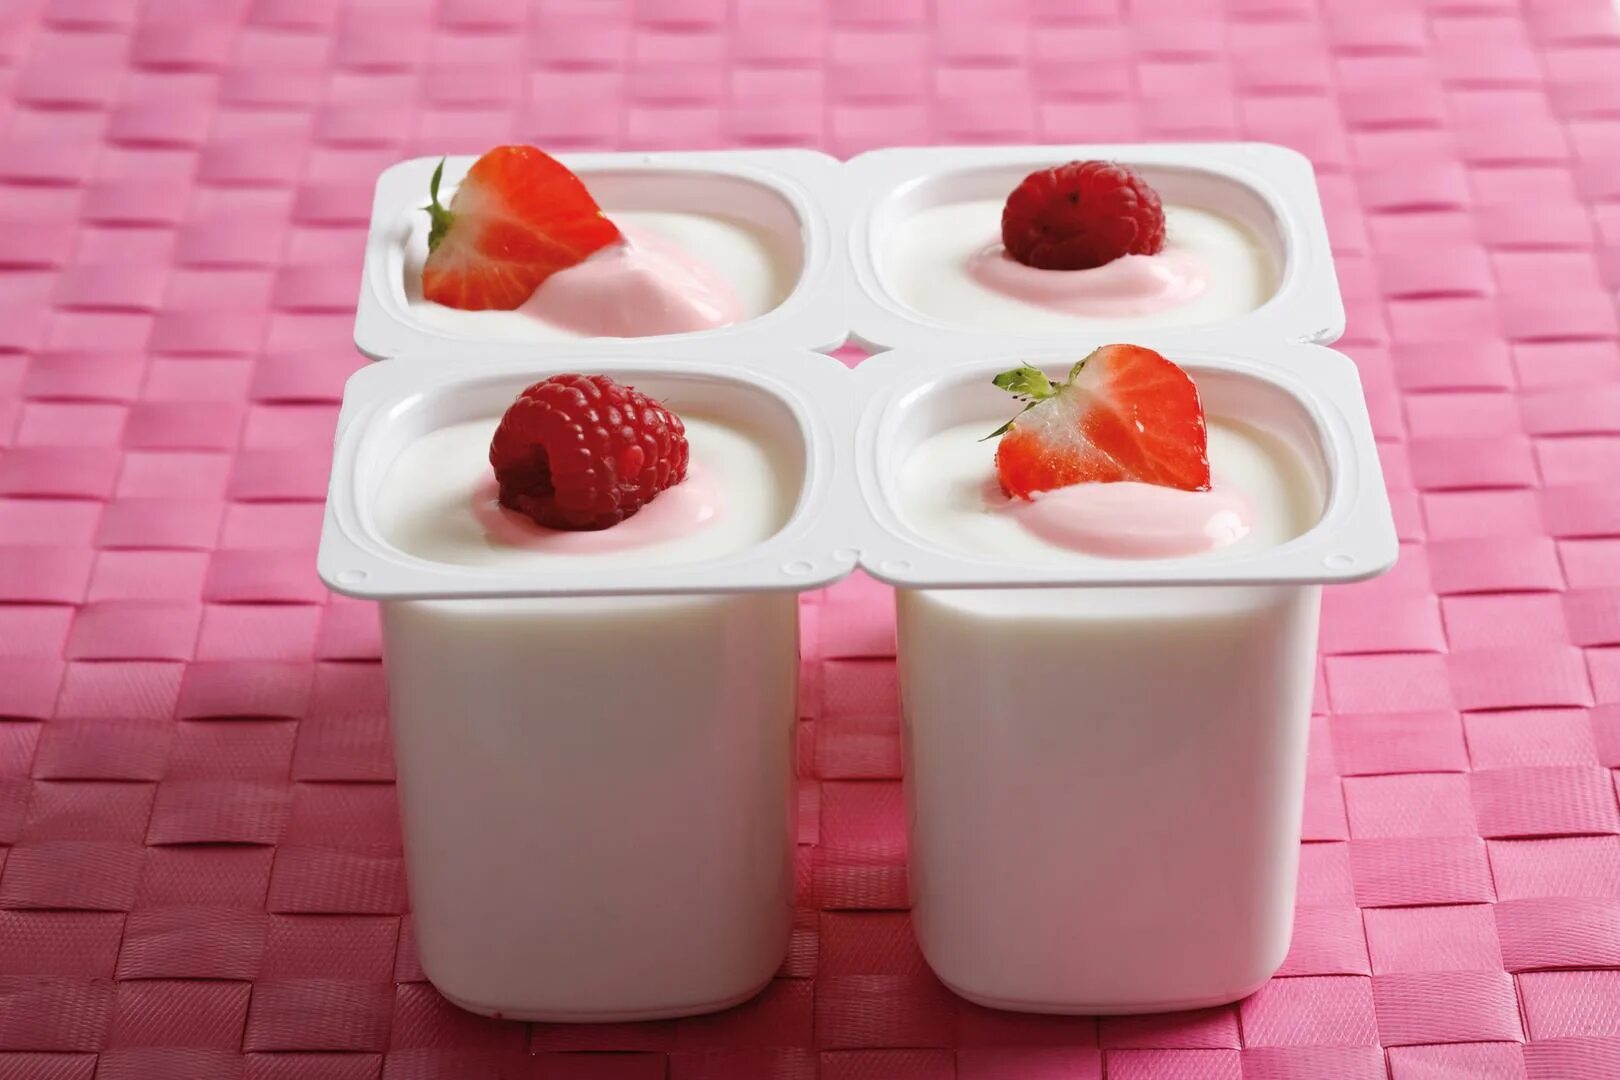 Фото йогурта. Йогурт. Открытый йогурт. Йогурт в стаканчиках. Йогурт картинка.